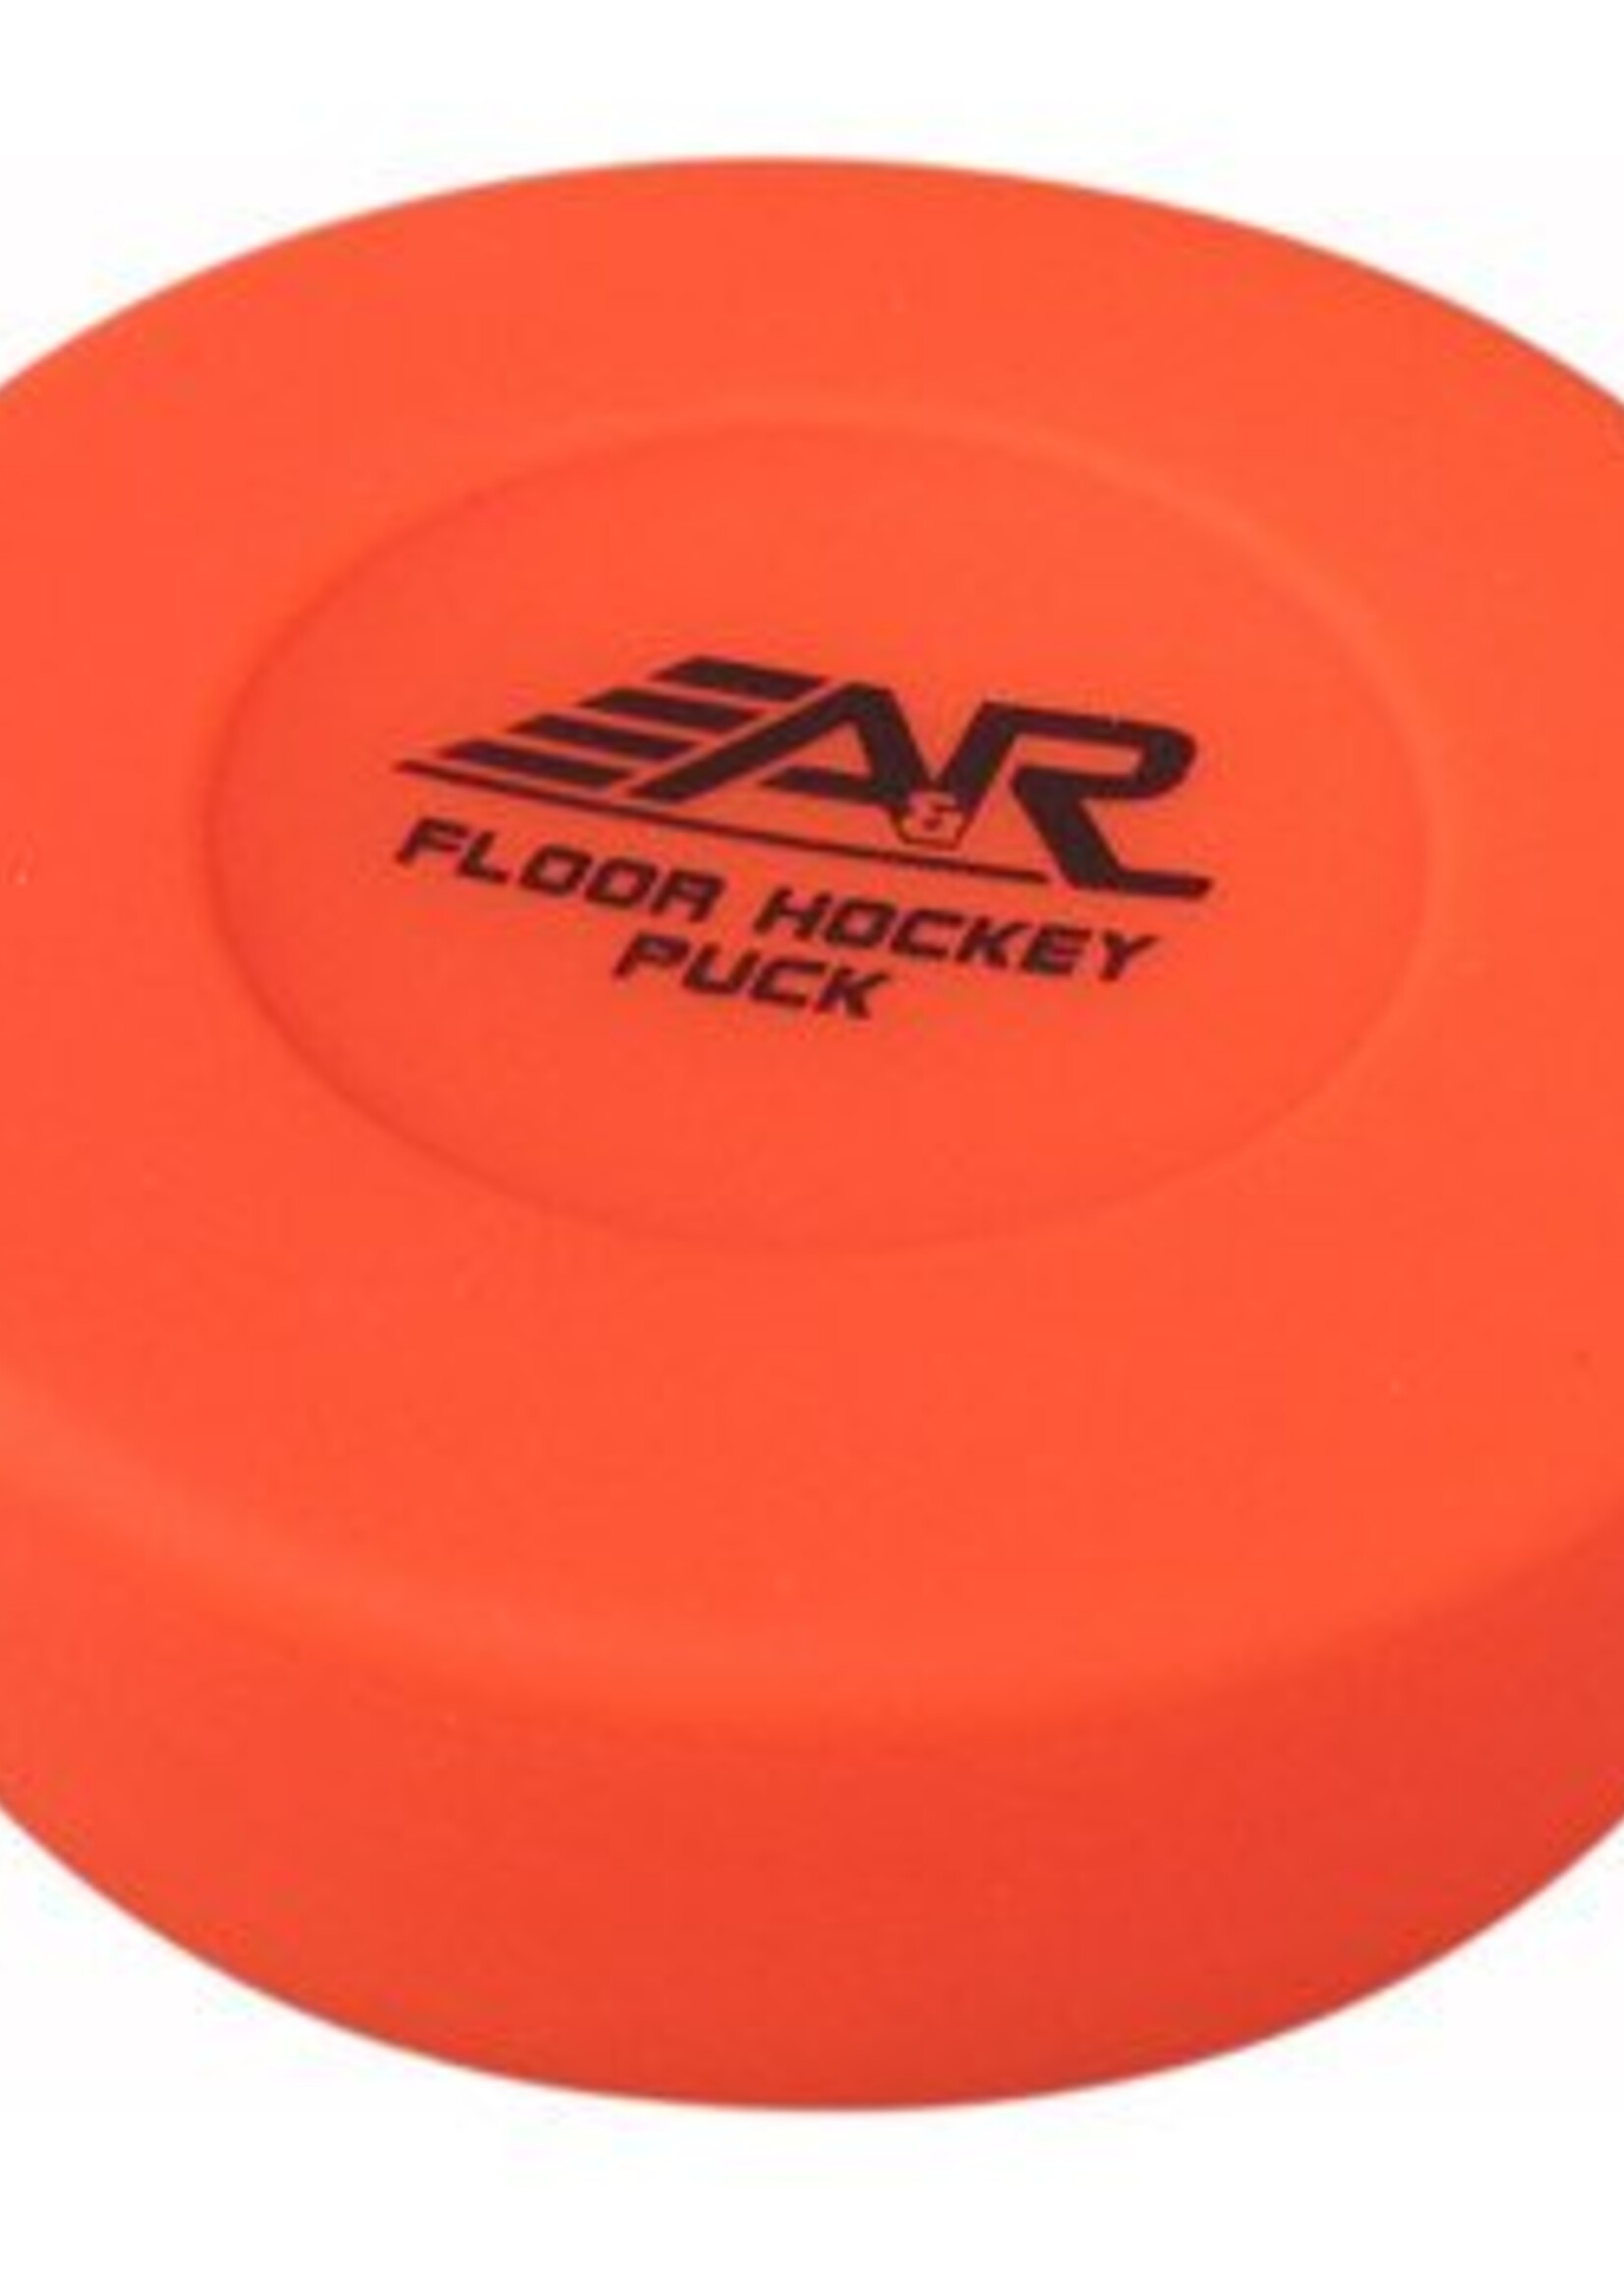 A&R A&R Floor Hockey Puck